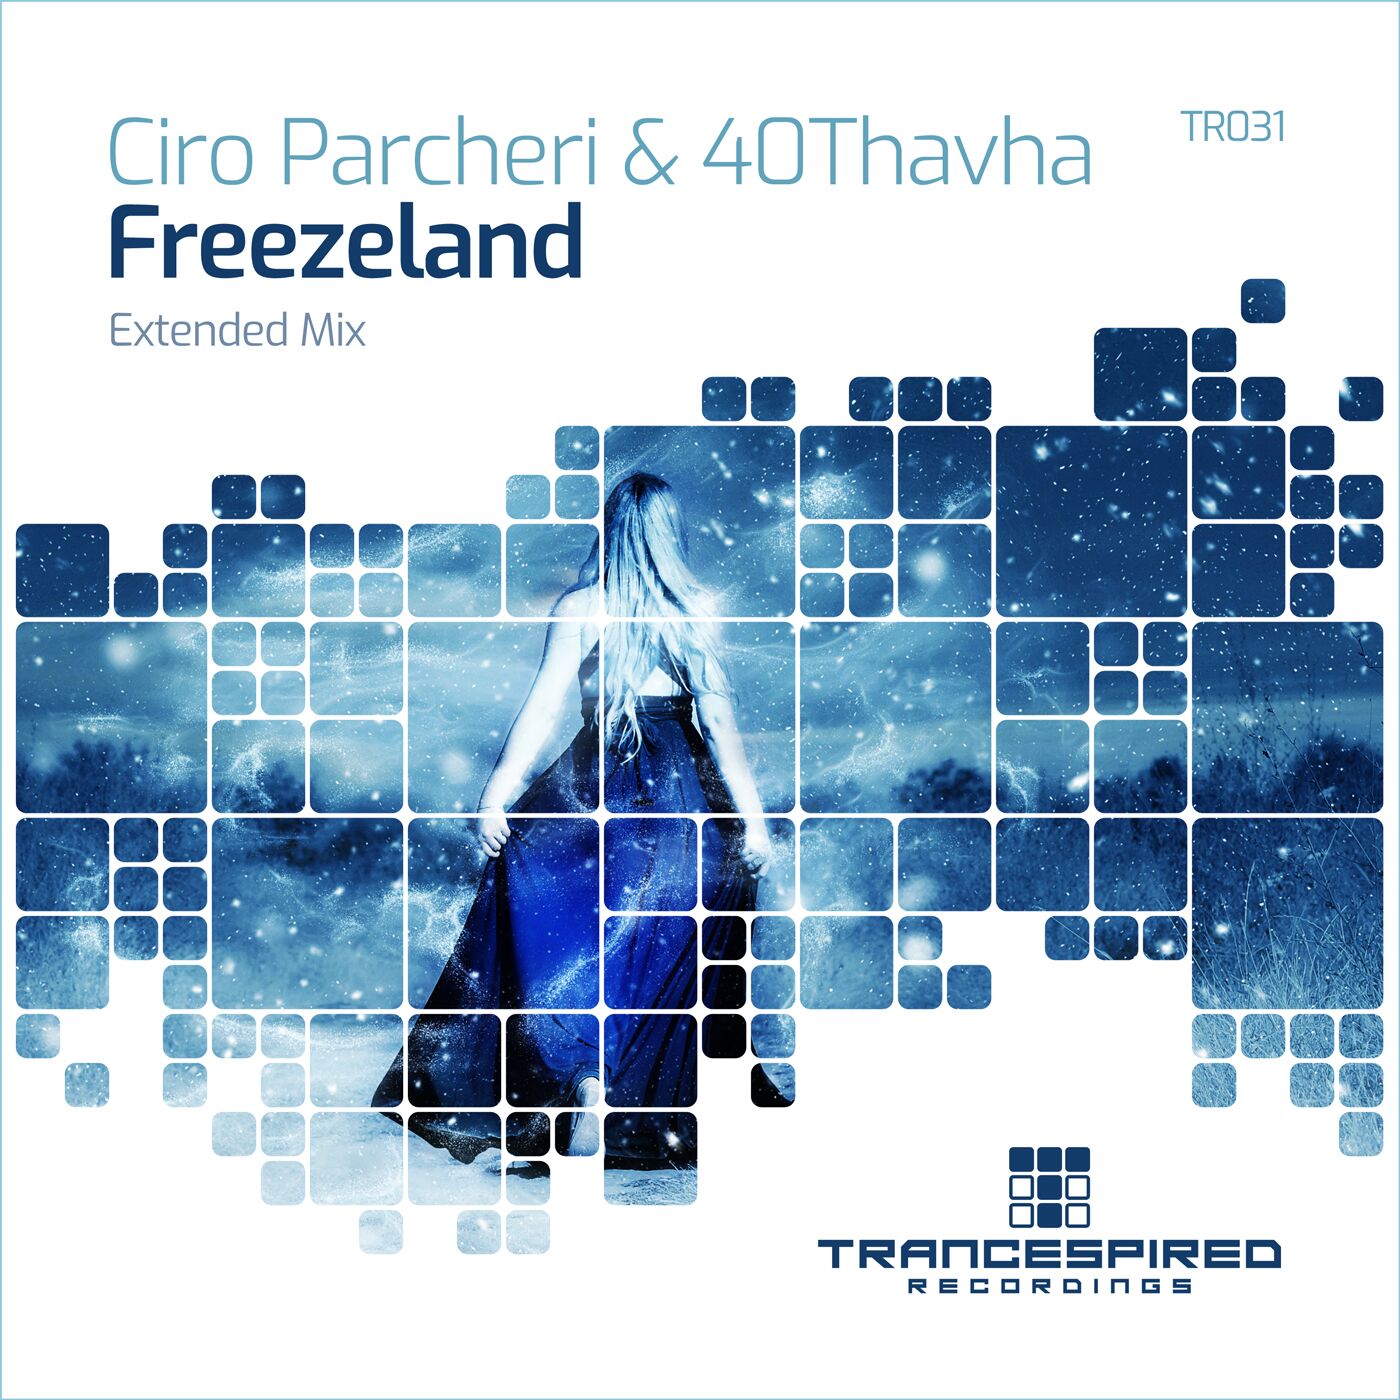 Ciro Parcheri and 40Thavha presents Freezeland on Trancespired Recordings